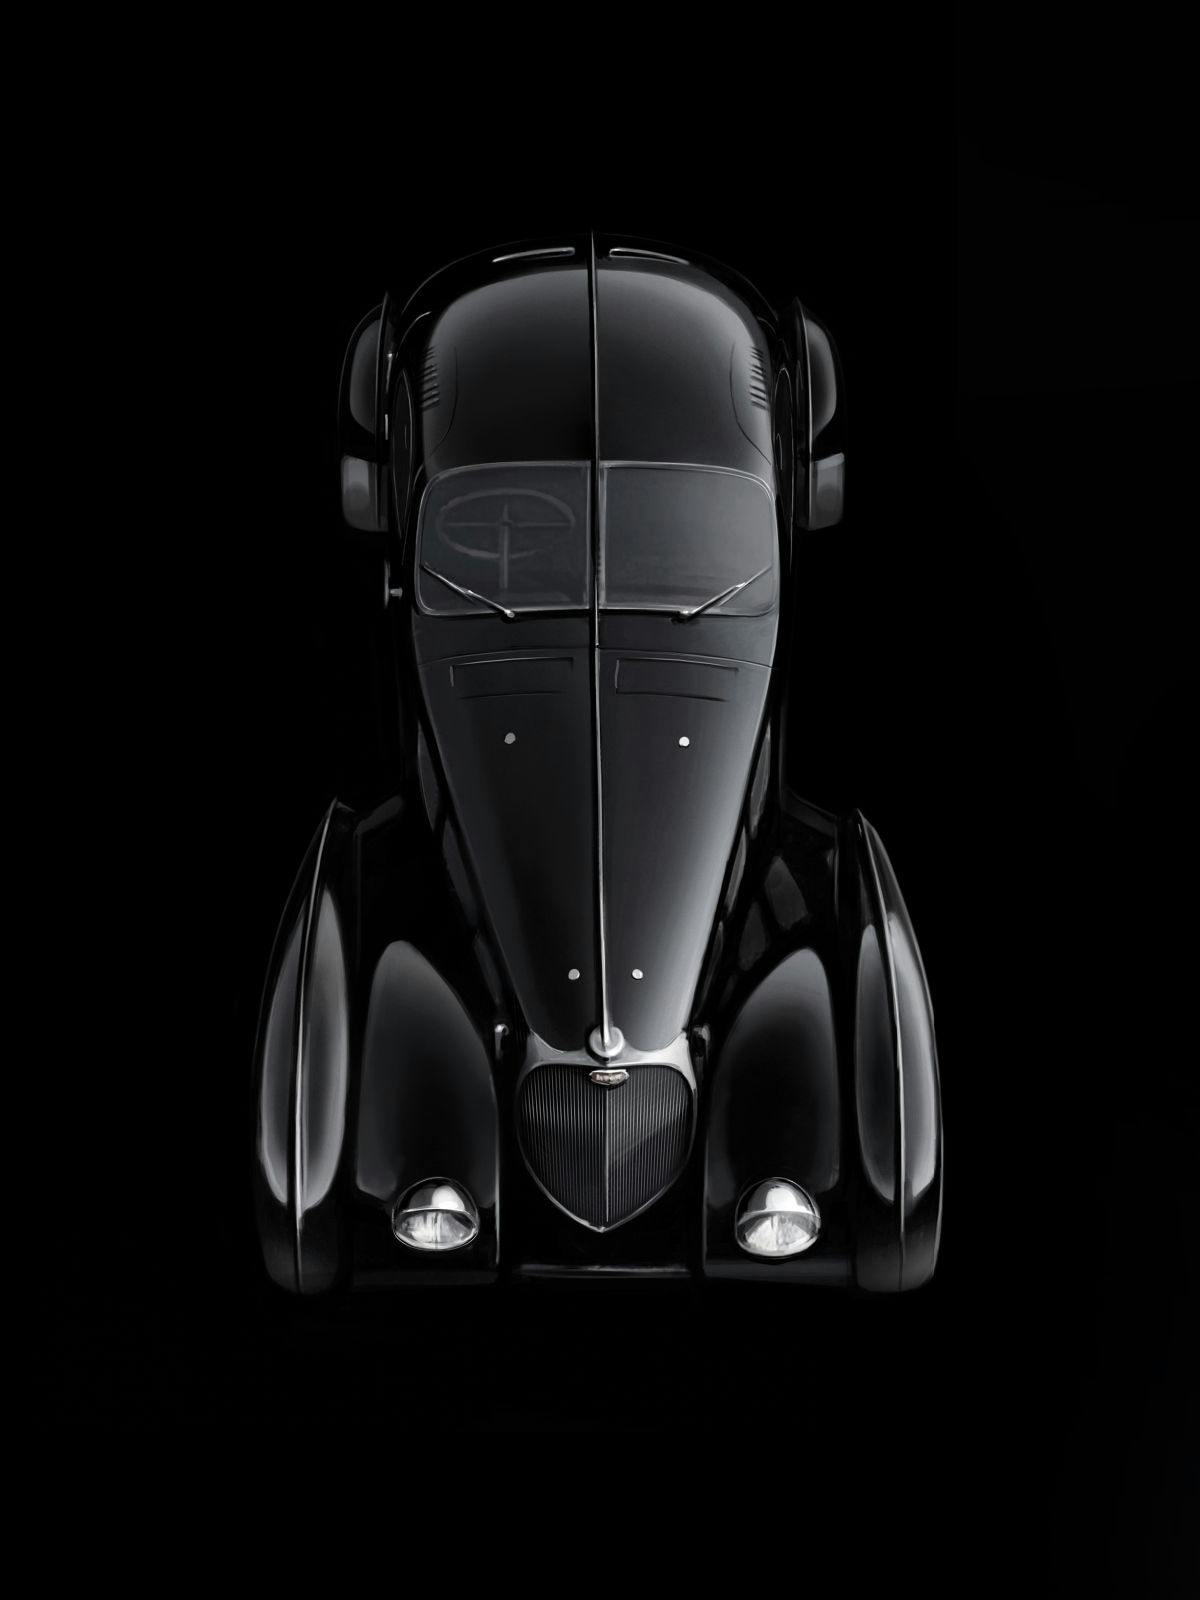 The legendary Bugatti Type 57 SC Atlantic.